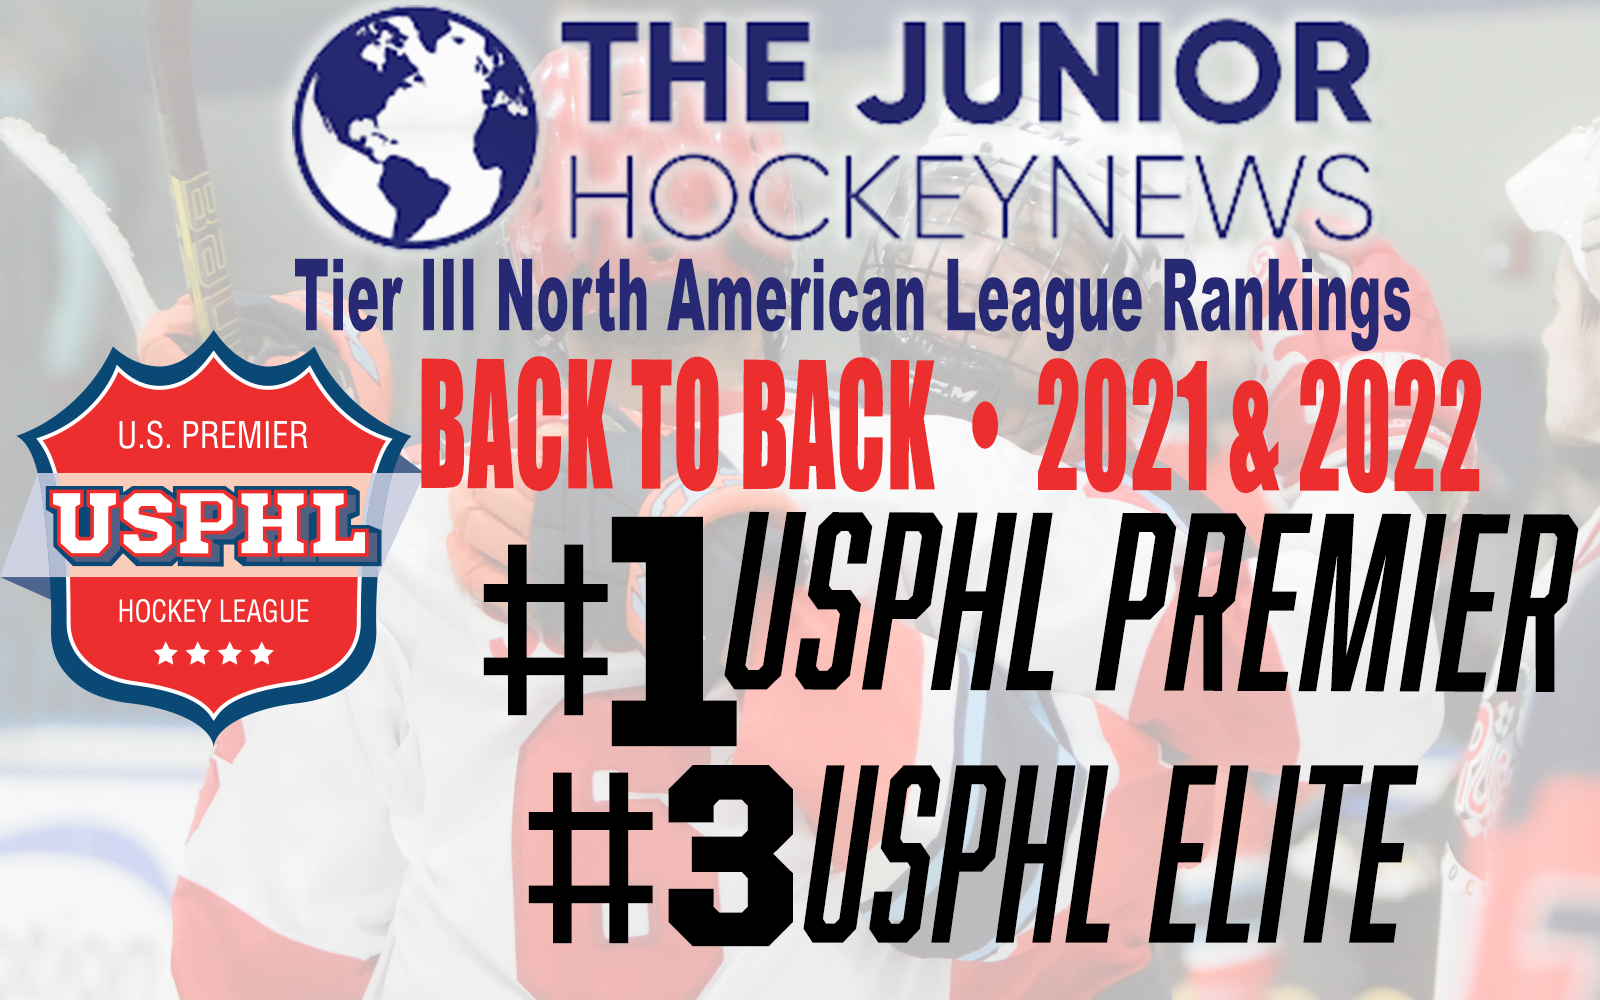 The Junior Hockey News Once Again Ranks USPHL Premier As No. 1 Tier-III League In North America